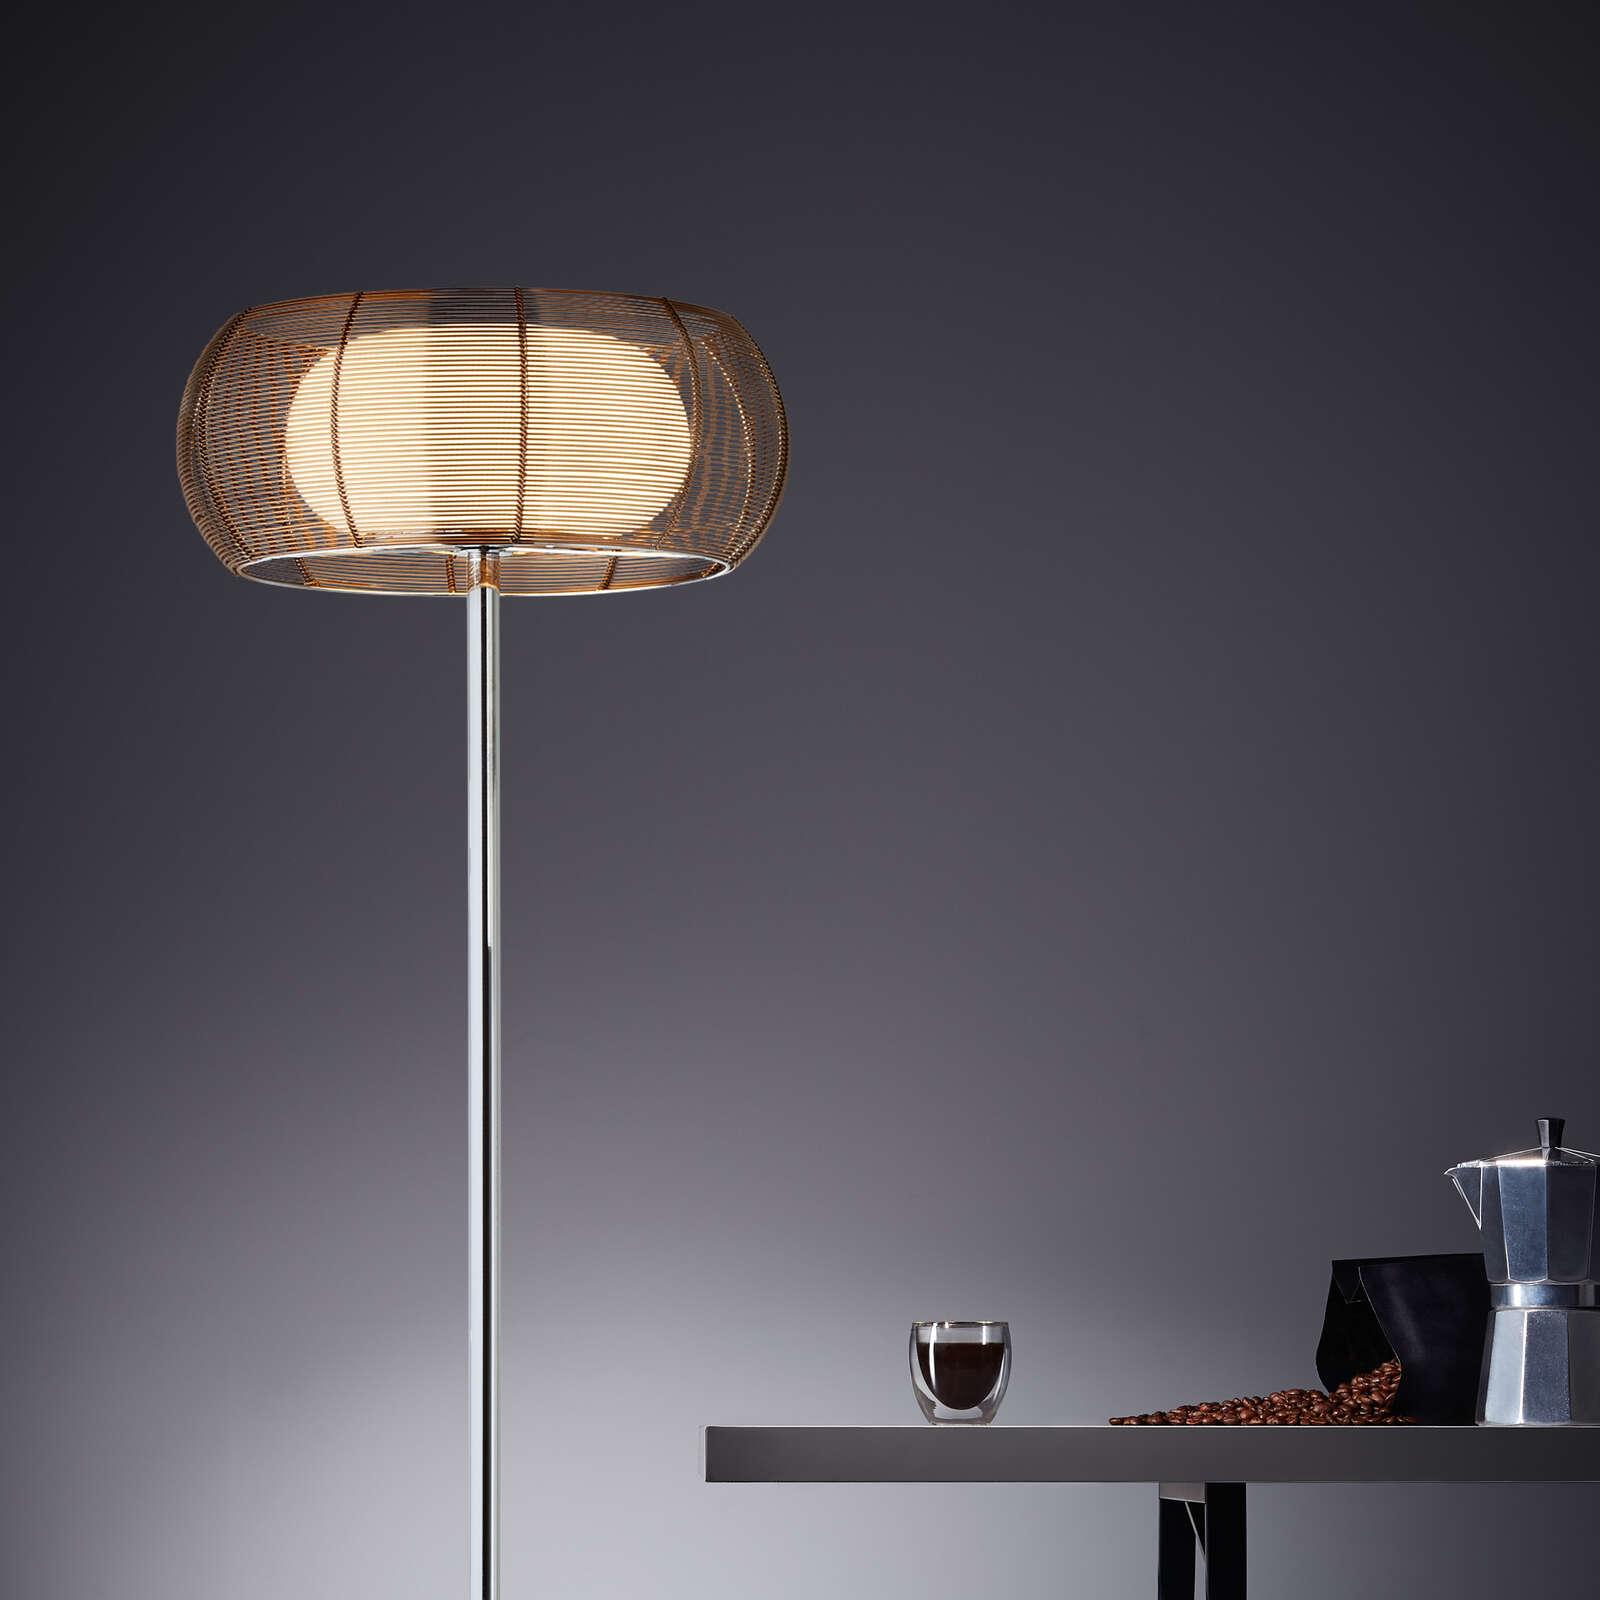             Lámpara de pie de cristal - Maxime 11 - Marrón
        